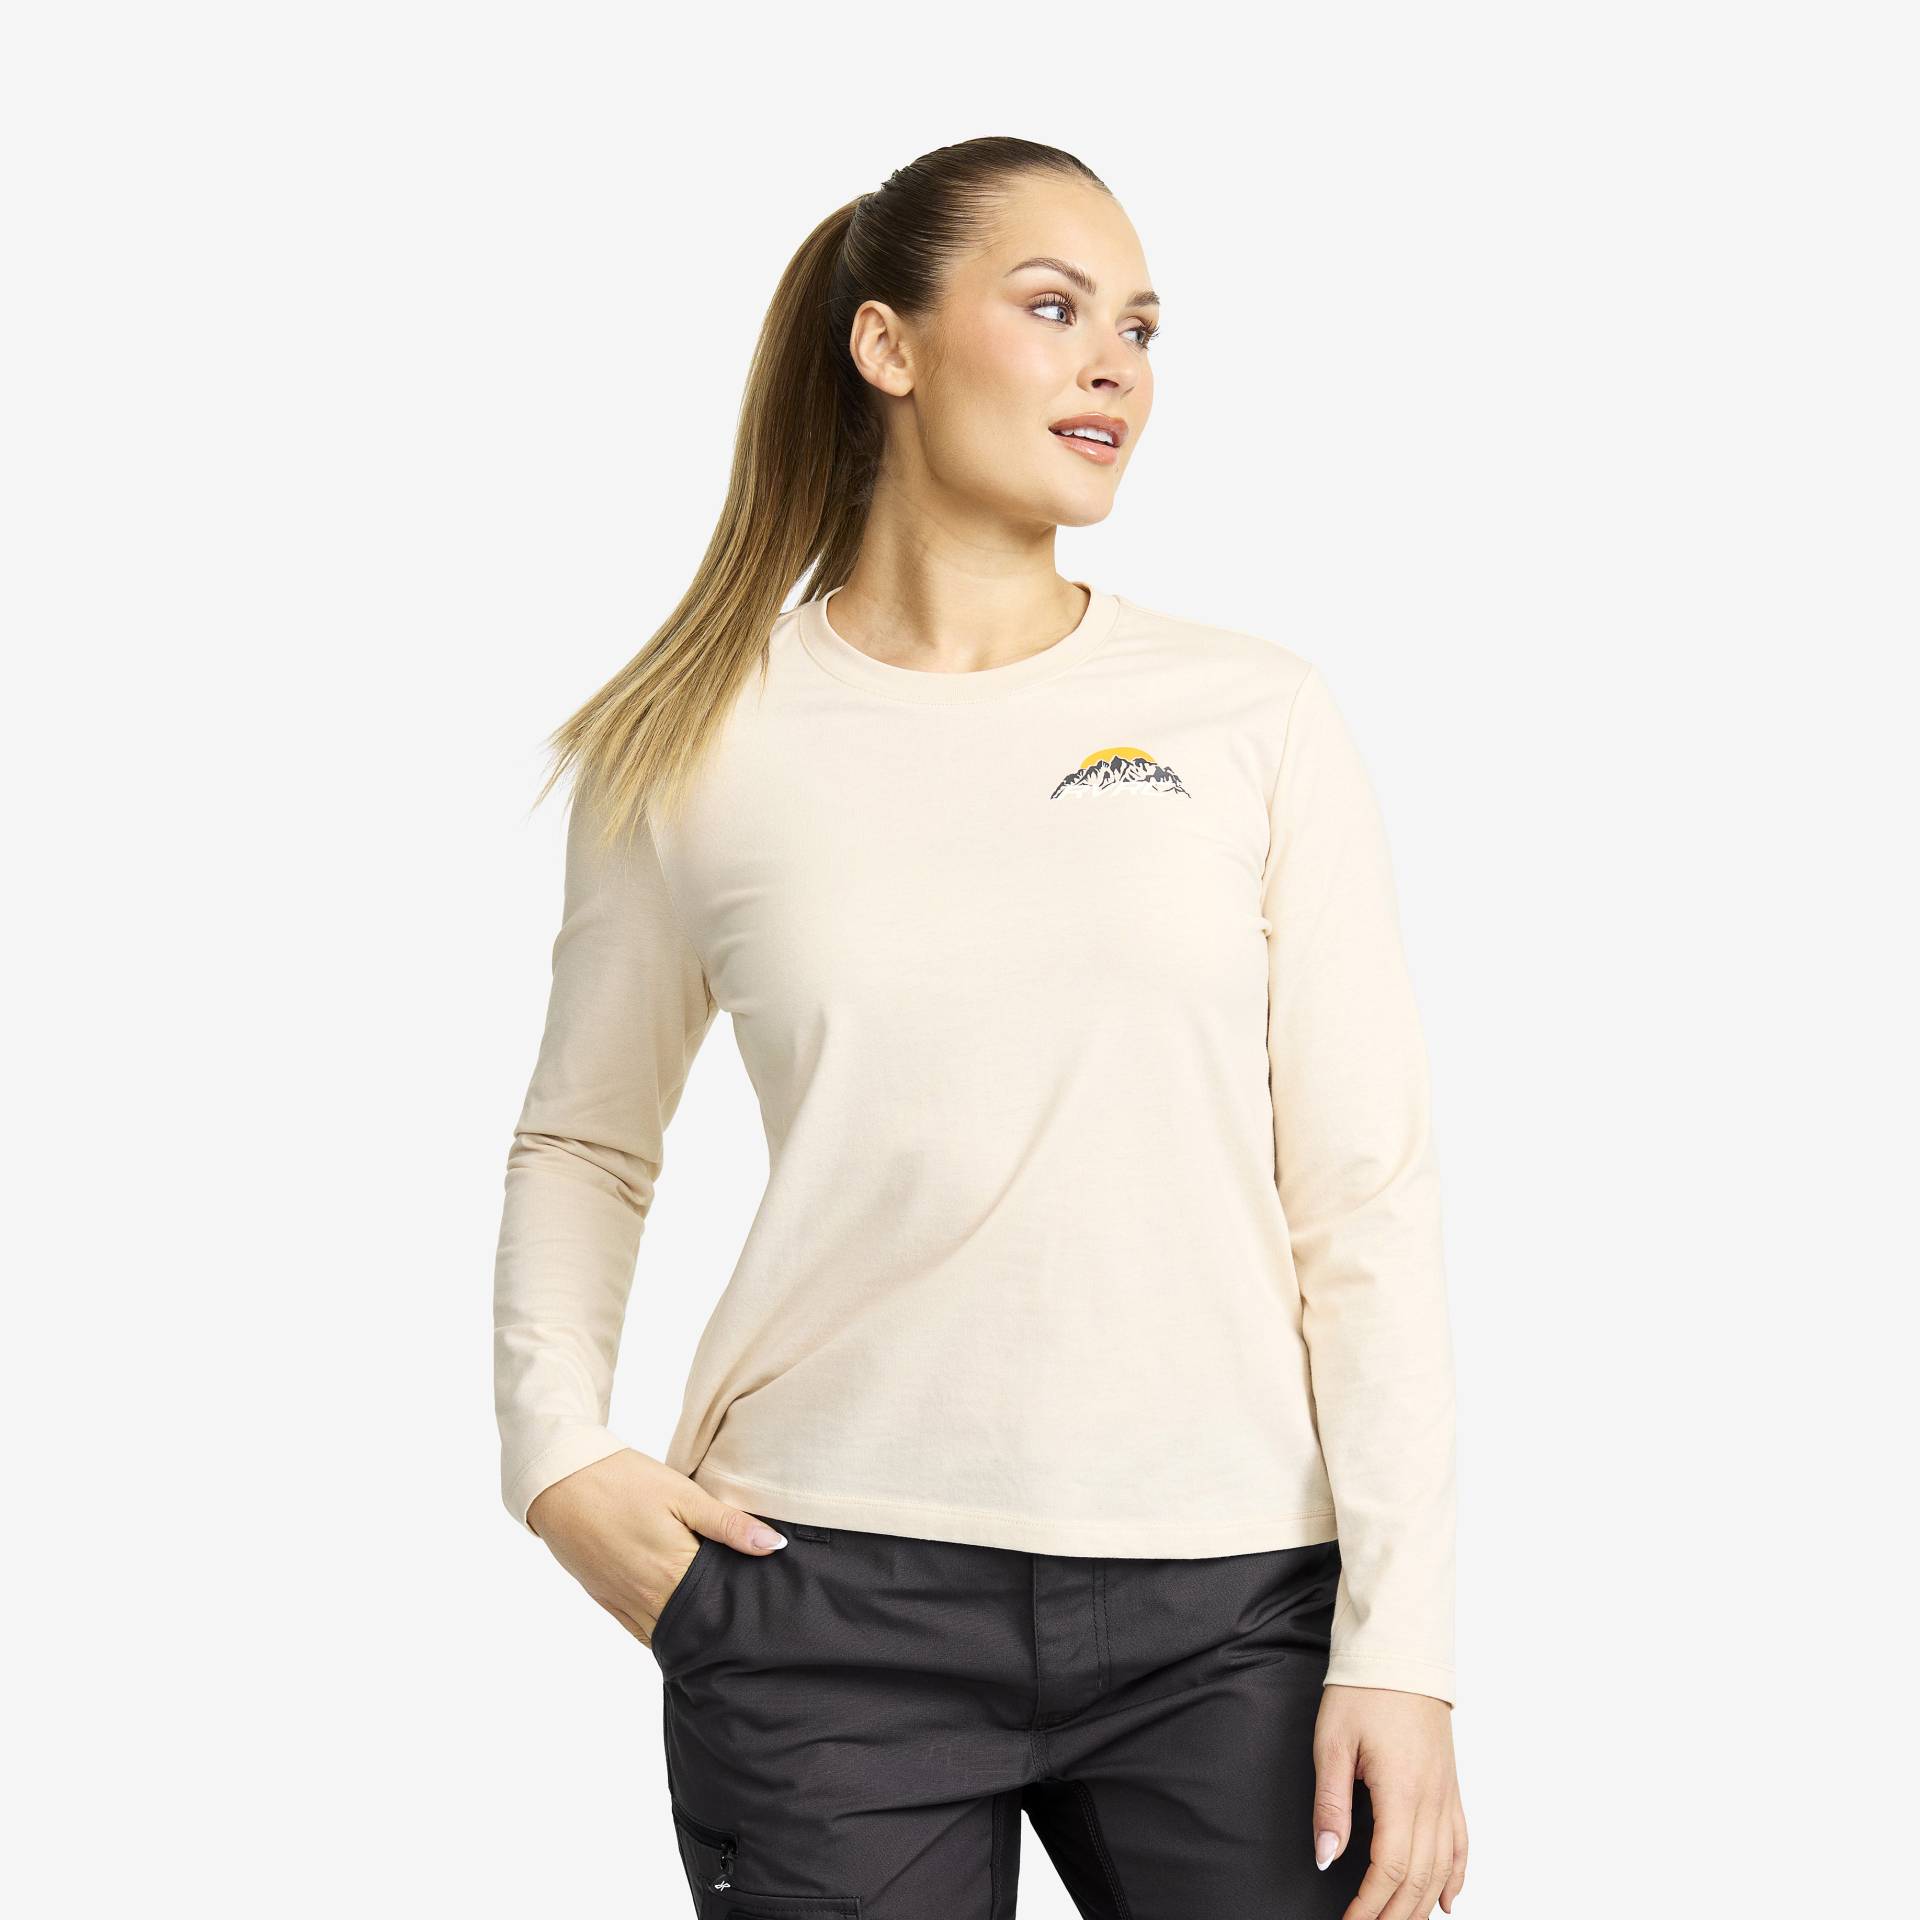 Easy Mountain Long-sleeved T-shirt Damen Oatmeal, Größe:S - Damen > Oberteile > Hemdblusen & Langarmshirts von RevolutionRace